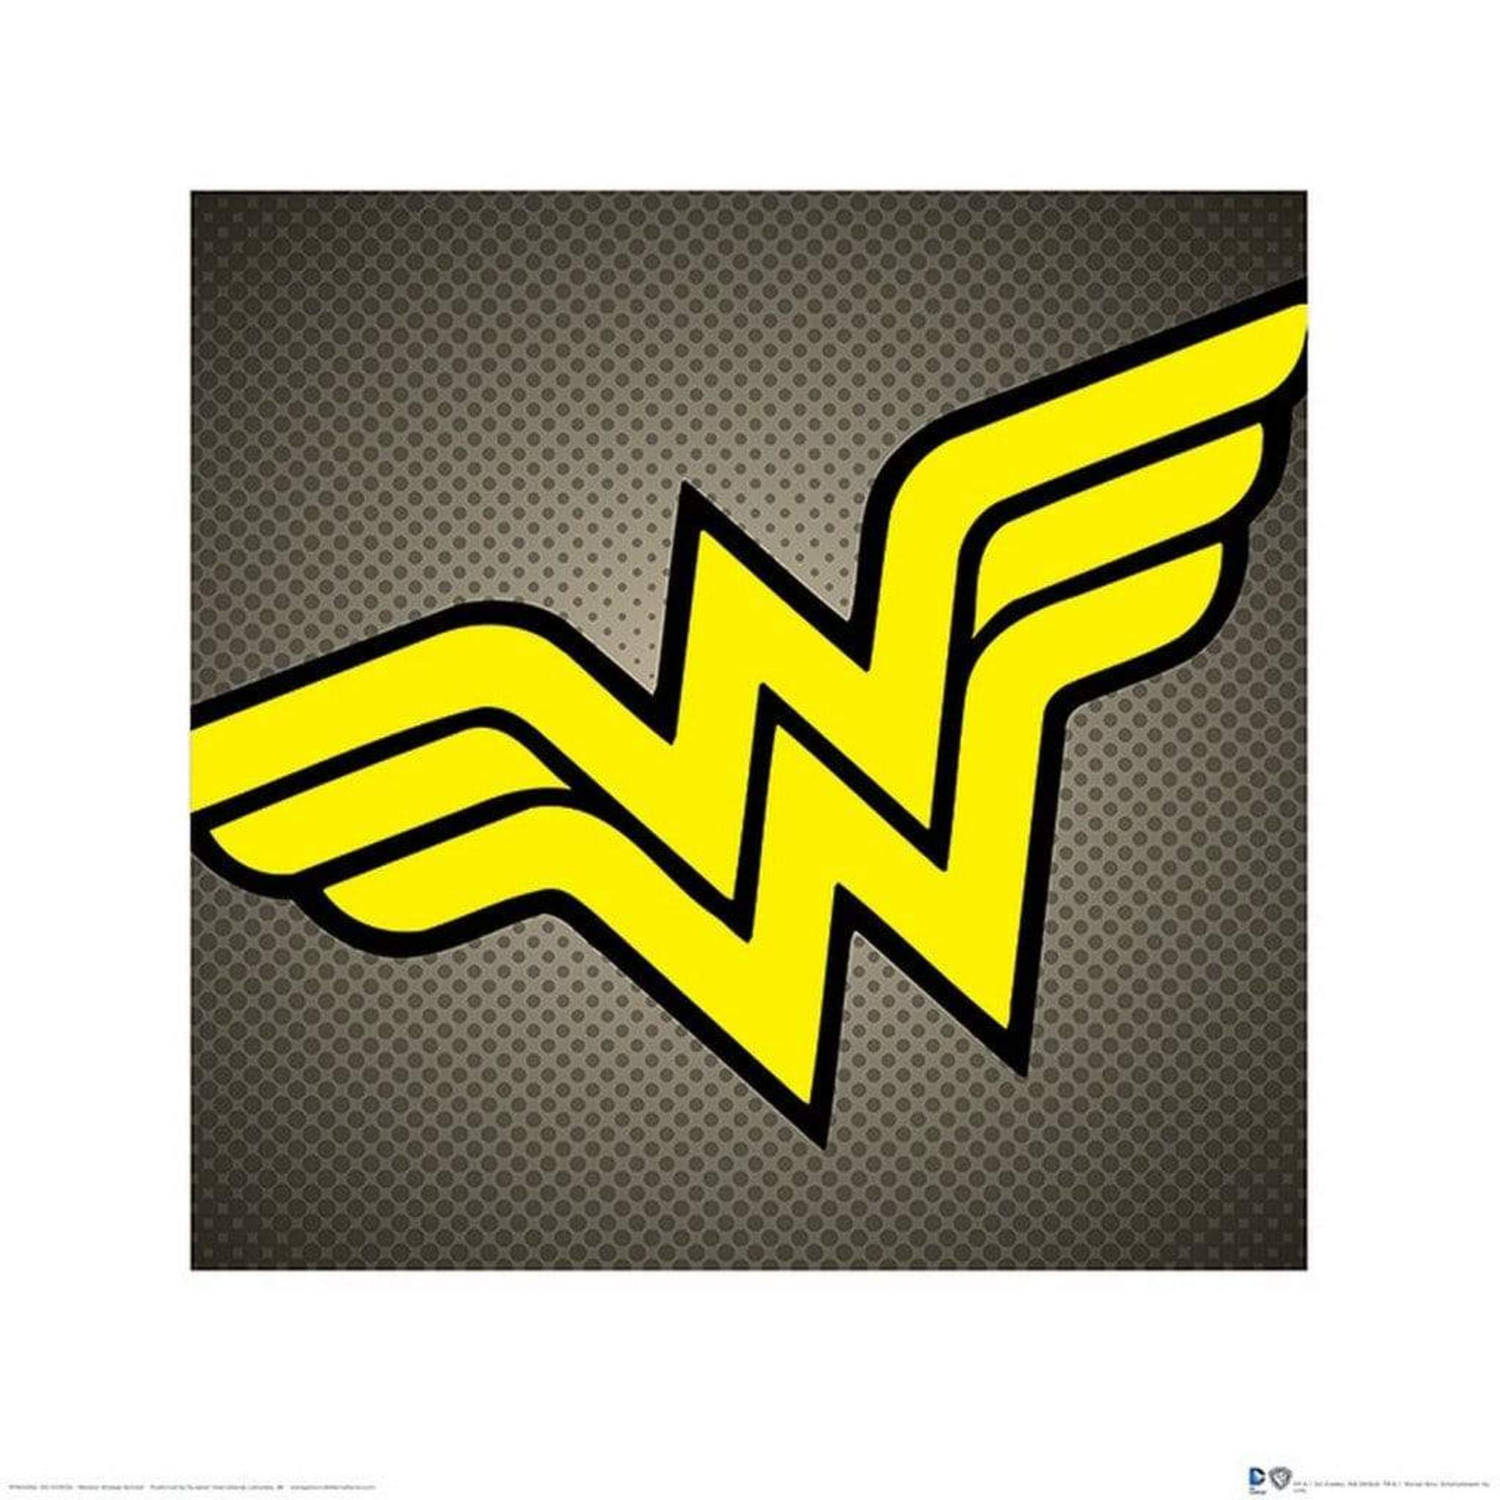 Kunstdruk DC Comics Wonder Woman Symbol 40x40cm